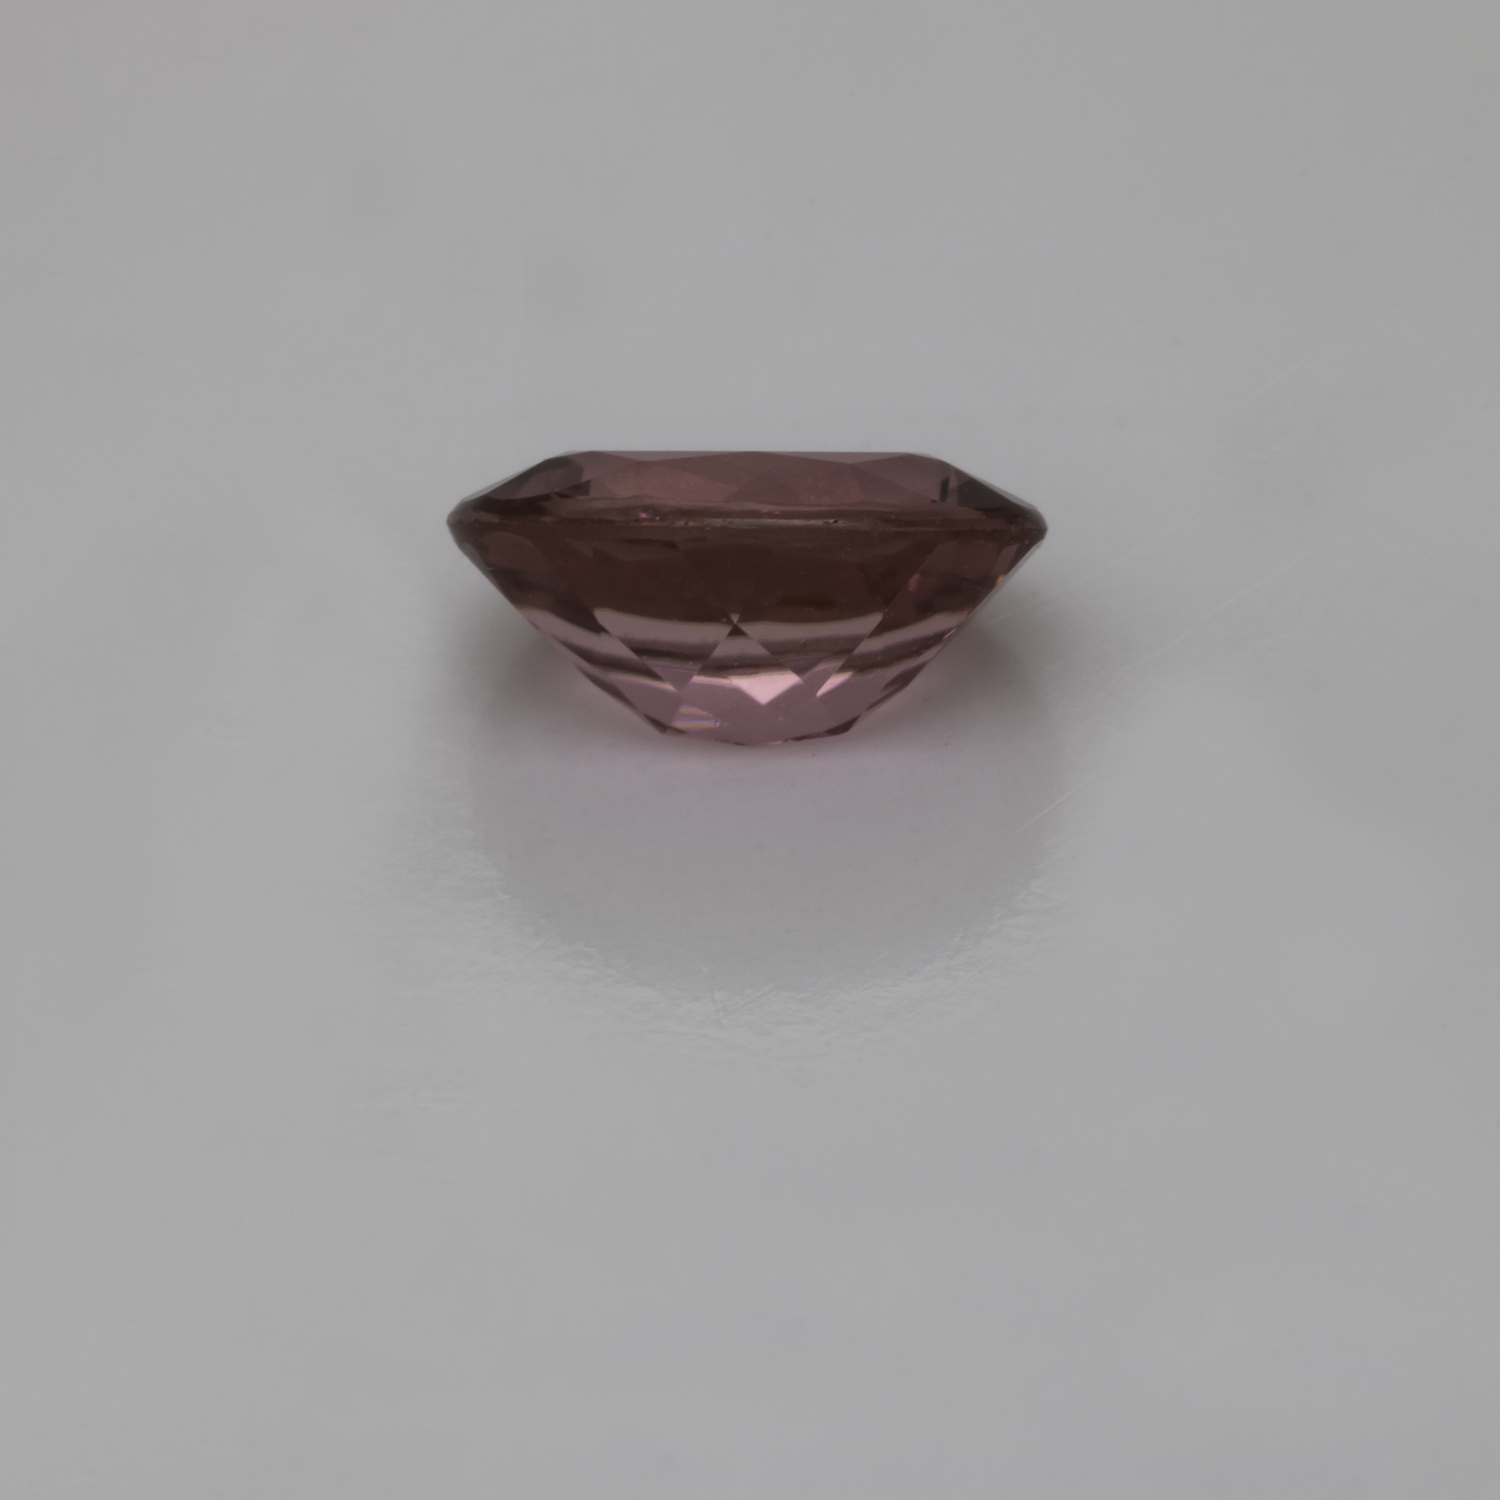 Tourmaline - pink, oval, 7x5 mm, 0.65-0.78 cts, No. TR12003